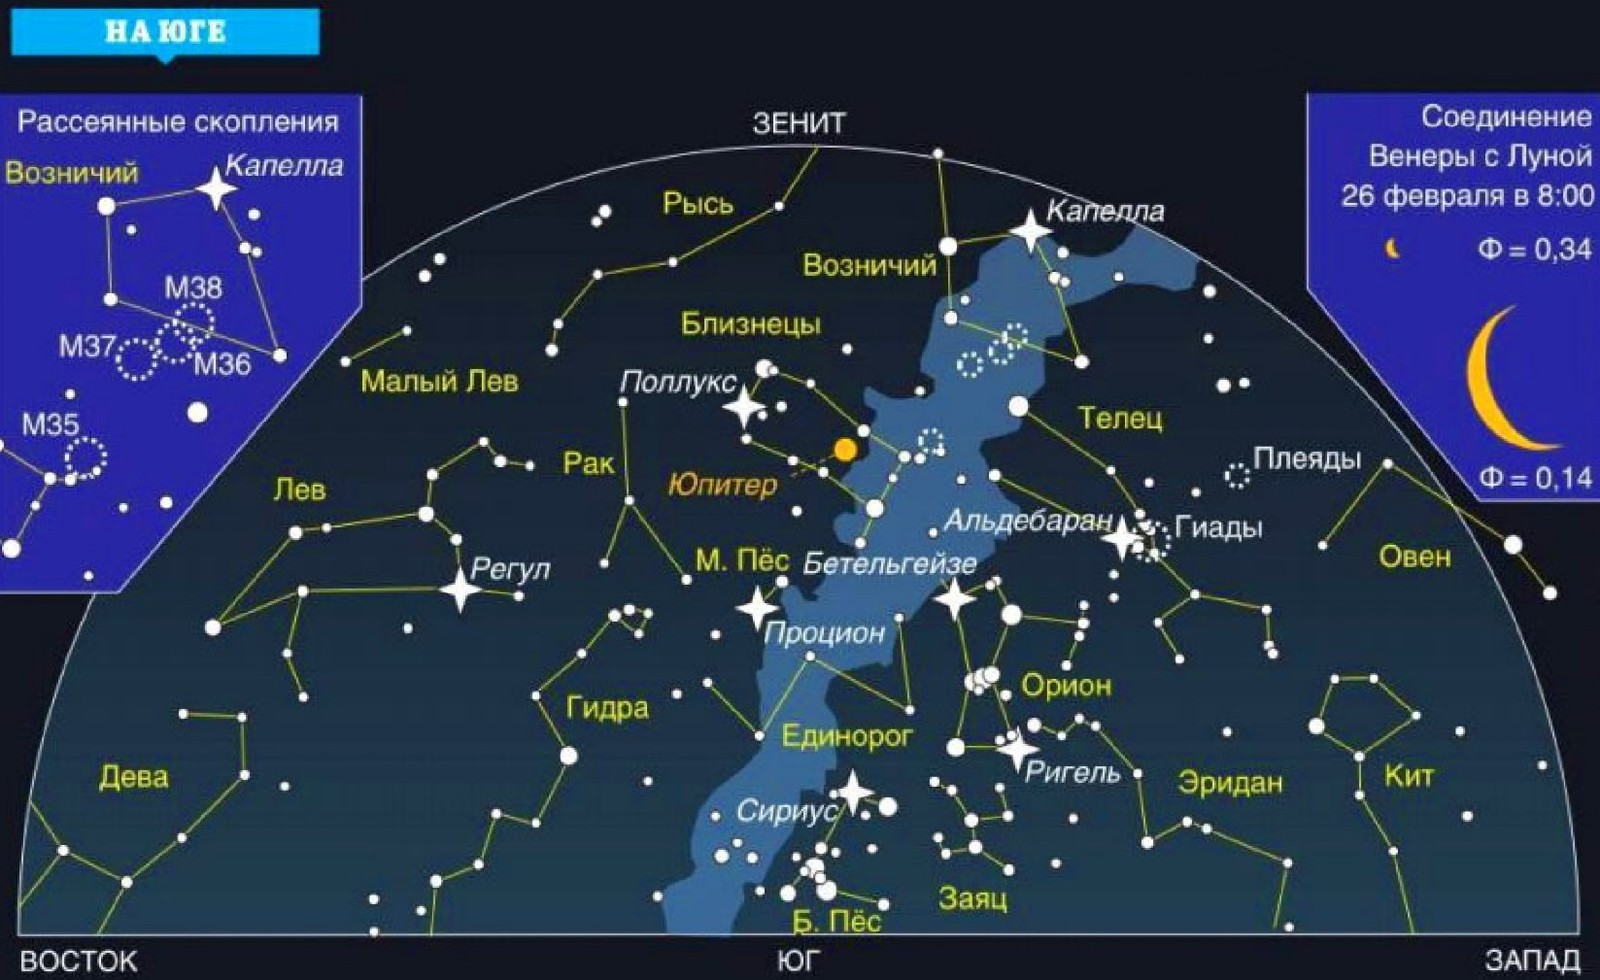 Созвездия на небе весной. Летние созвездия Северного полушария. Карта звездного неба с названиями звезд. Созвездия летнего неба Северного полушария. Созвездия Северного полушария летом.